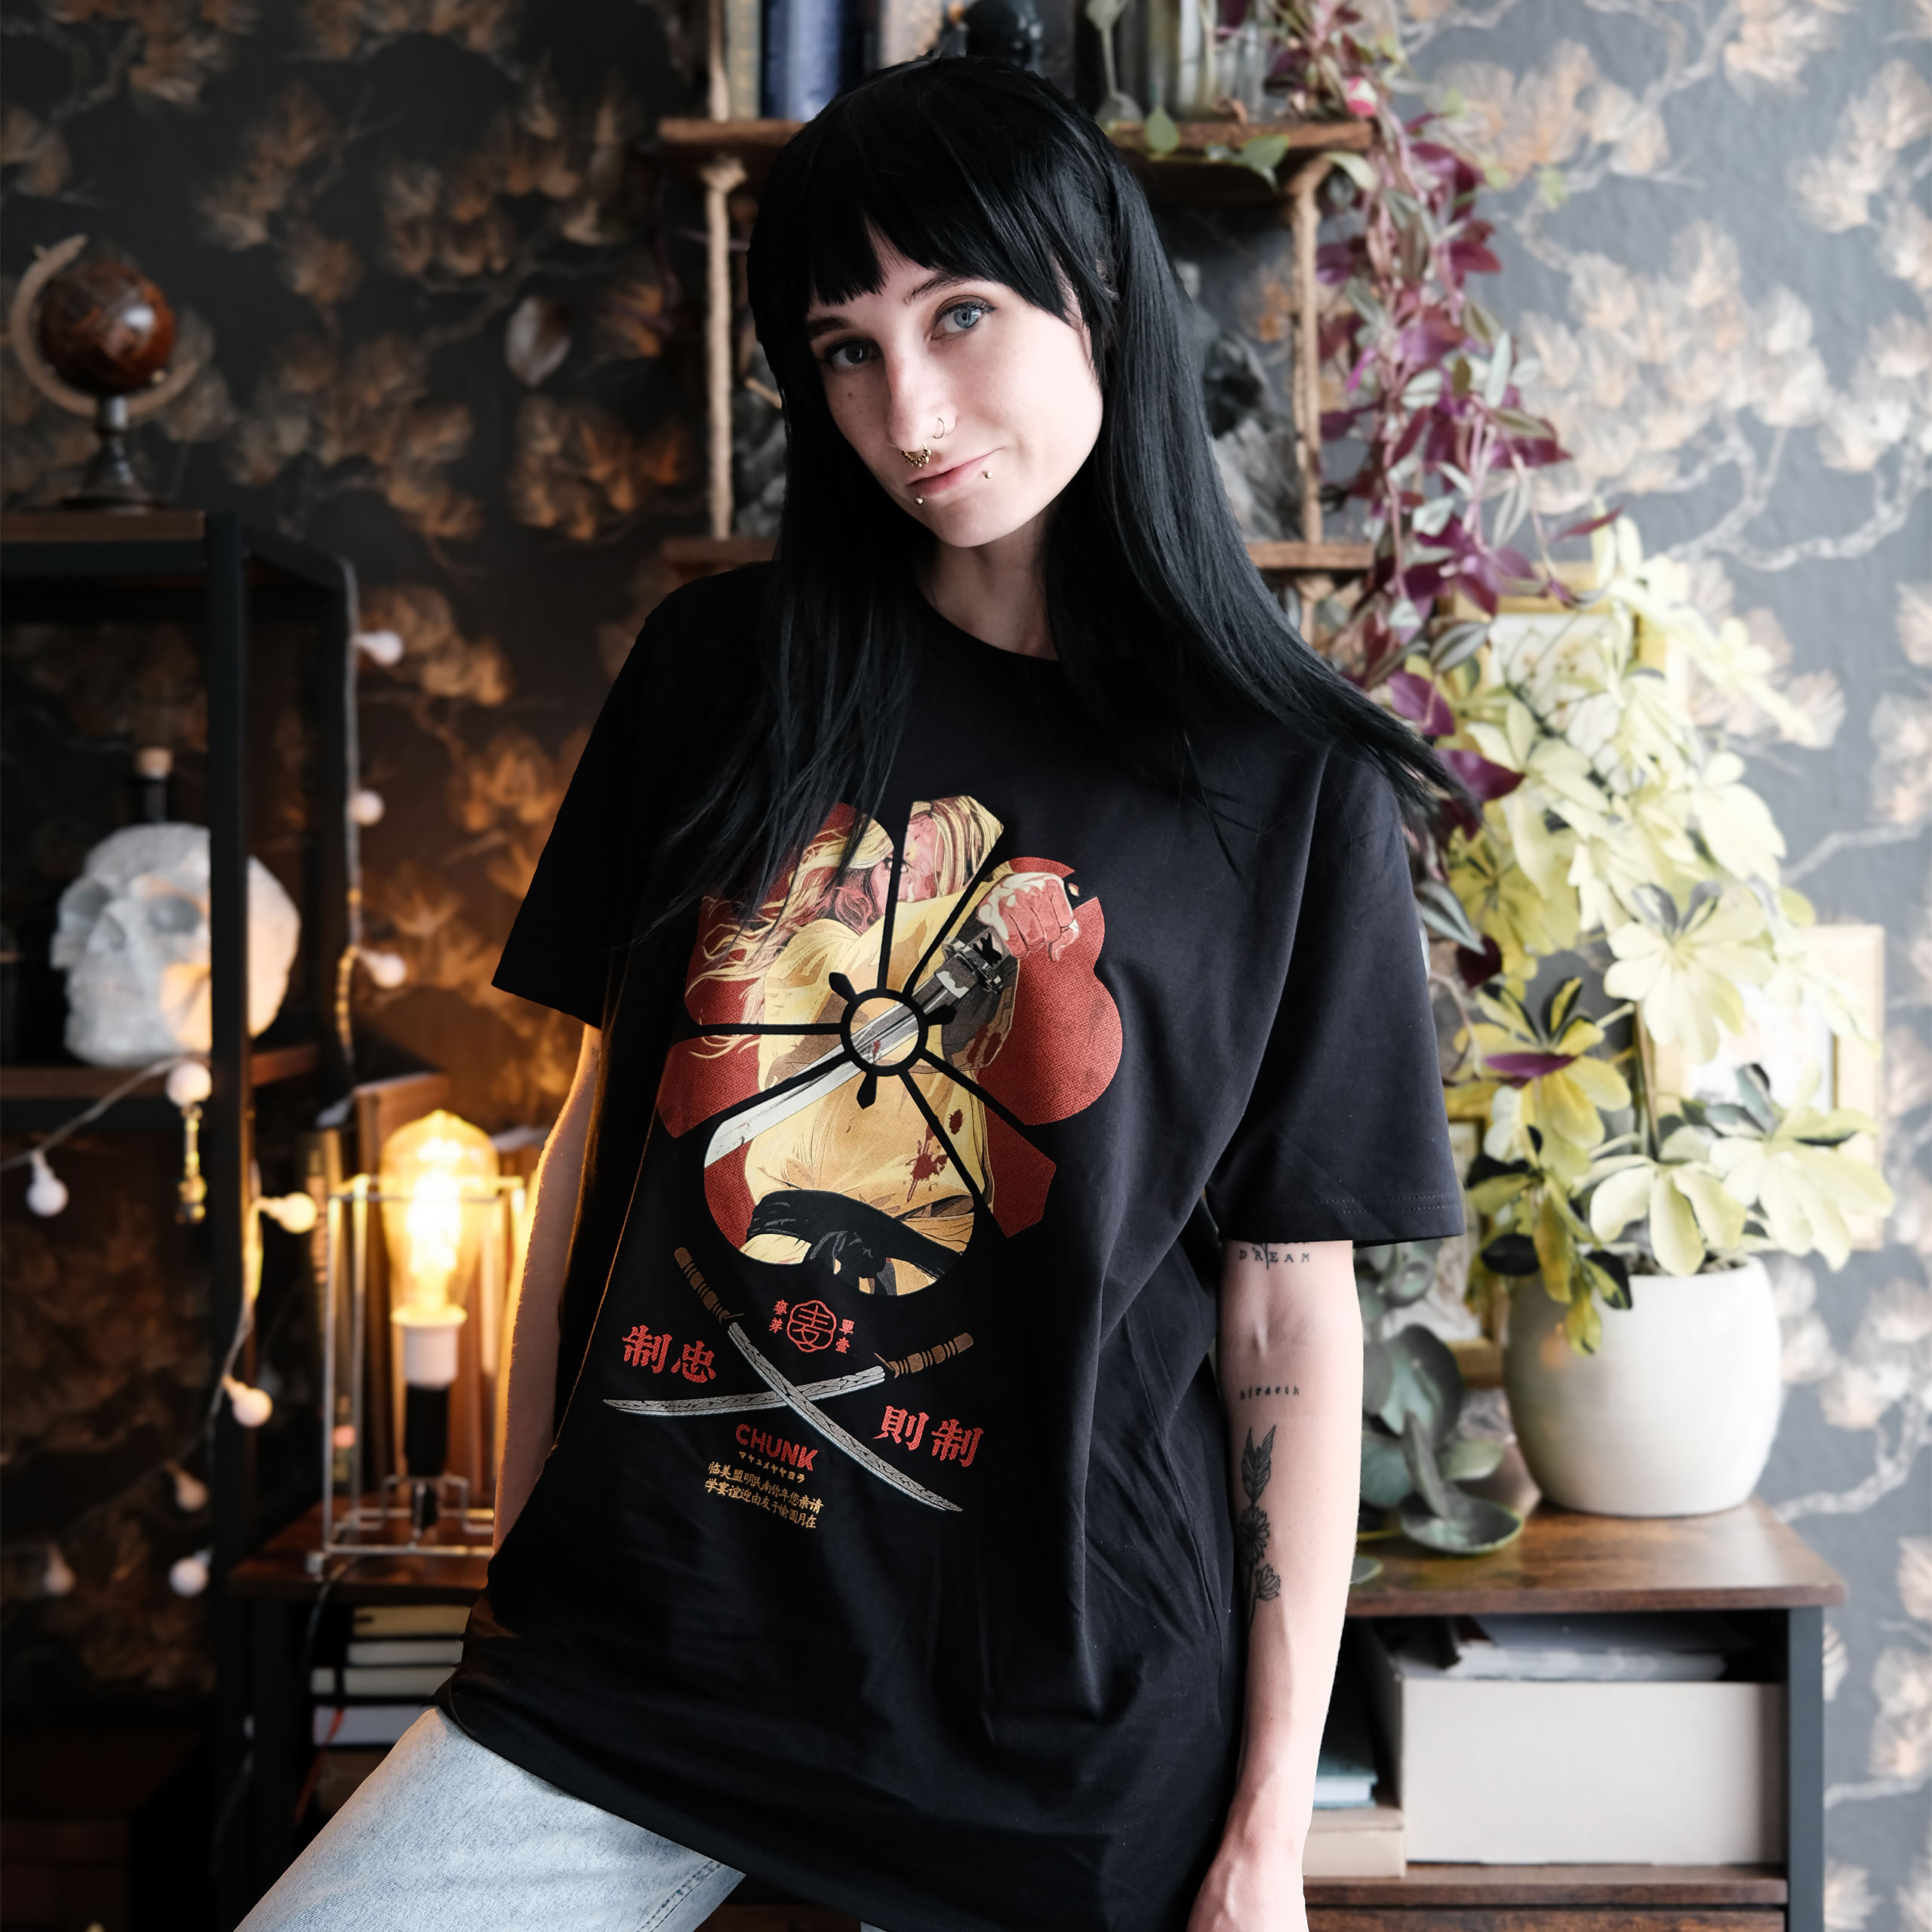 Female Assassin T-Shirt für Kill Bill Fans schwarz